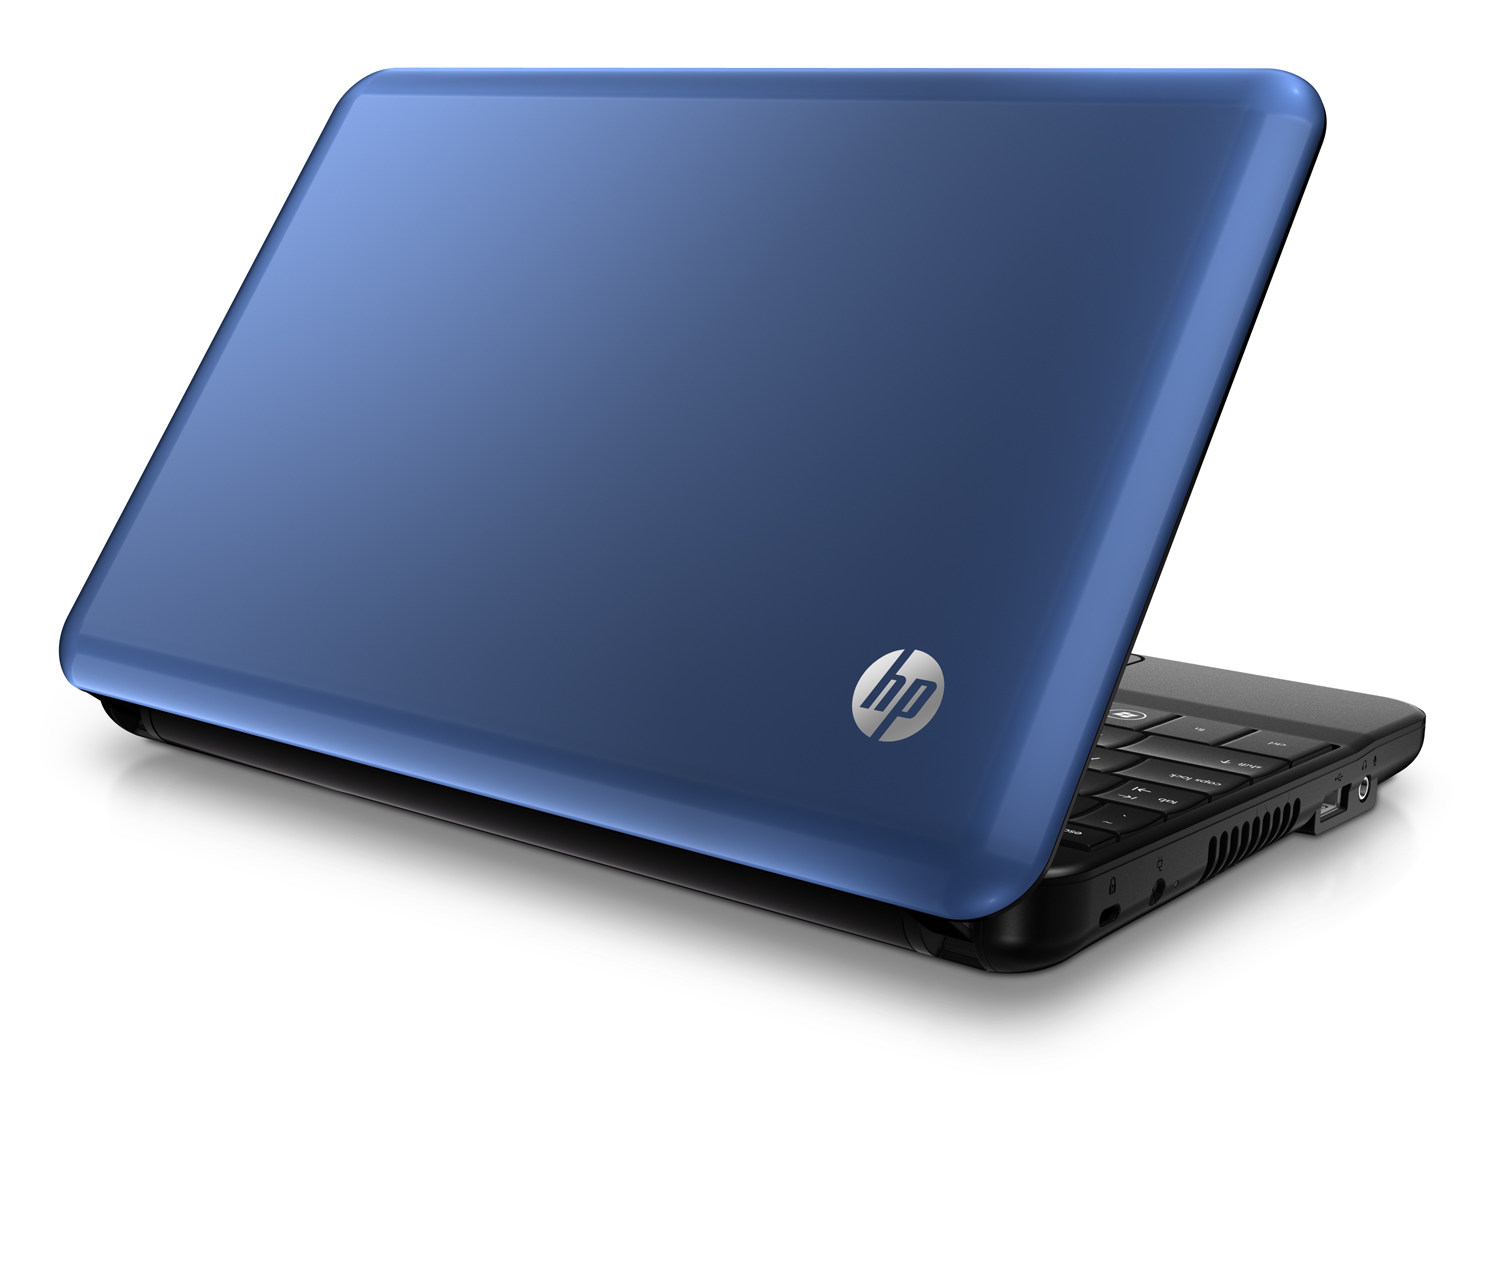 AT&T's new HP Netbook